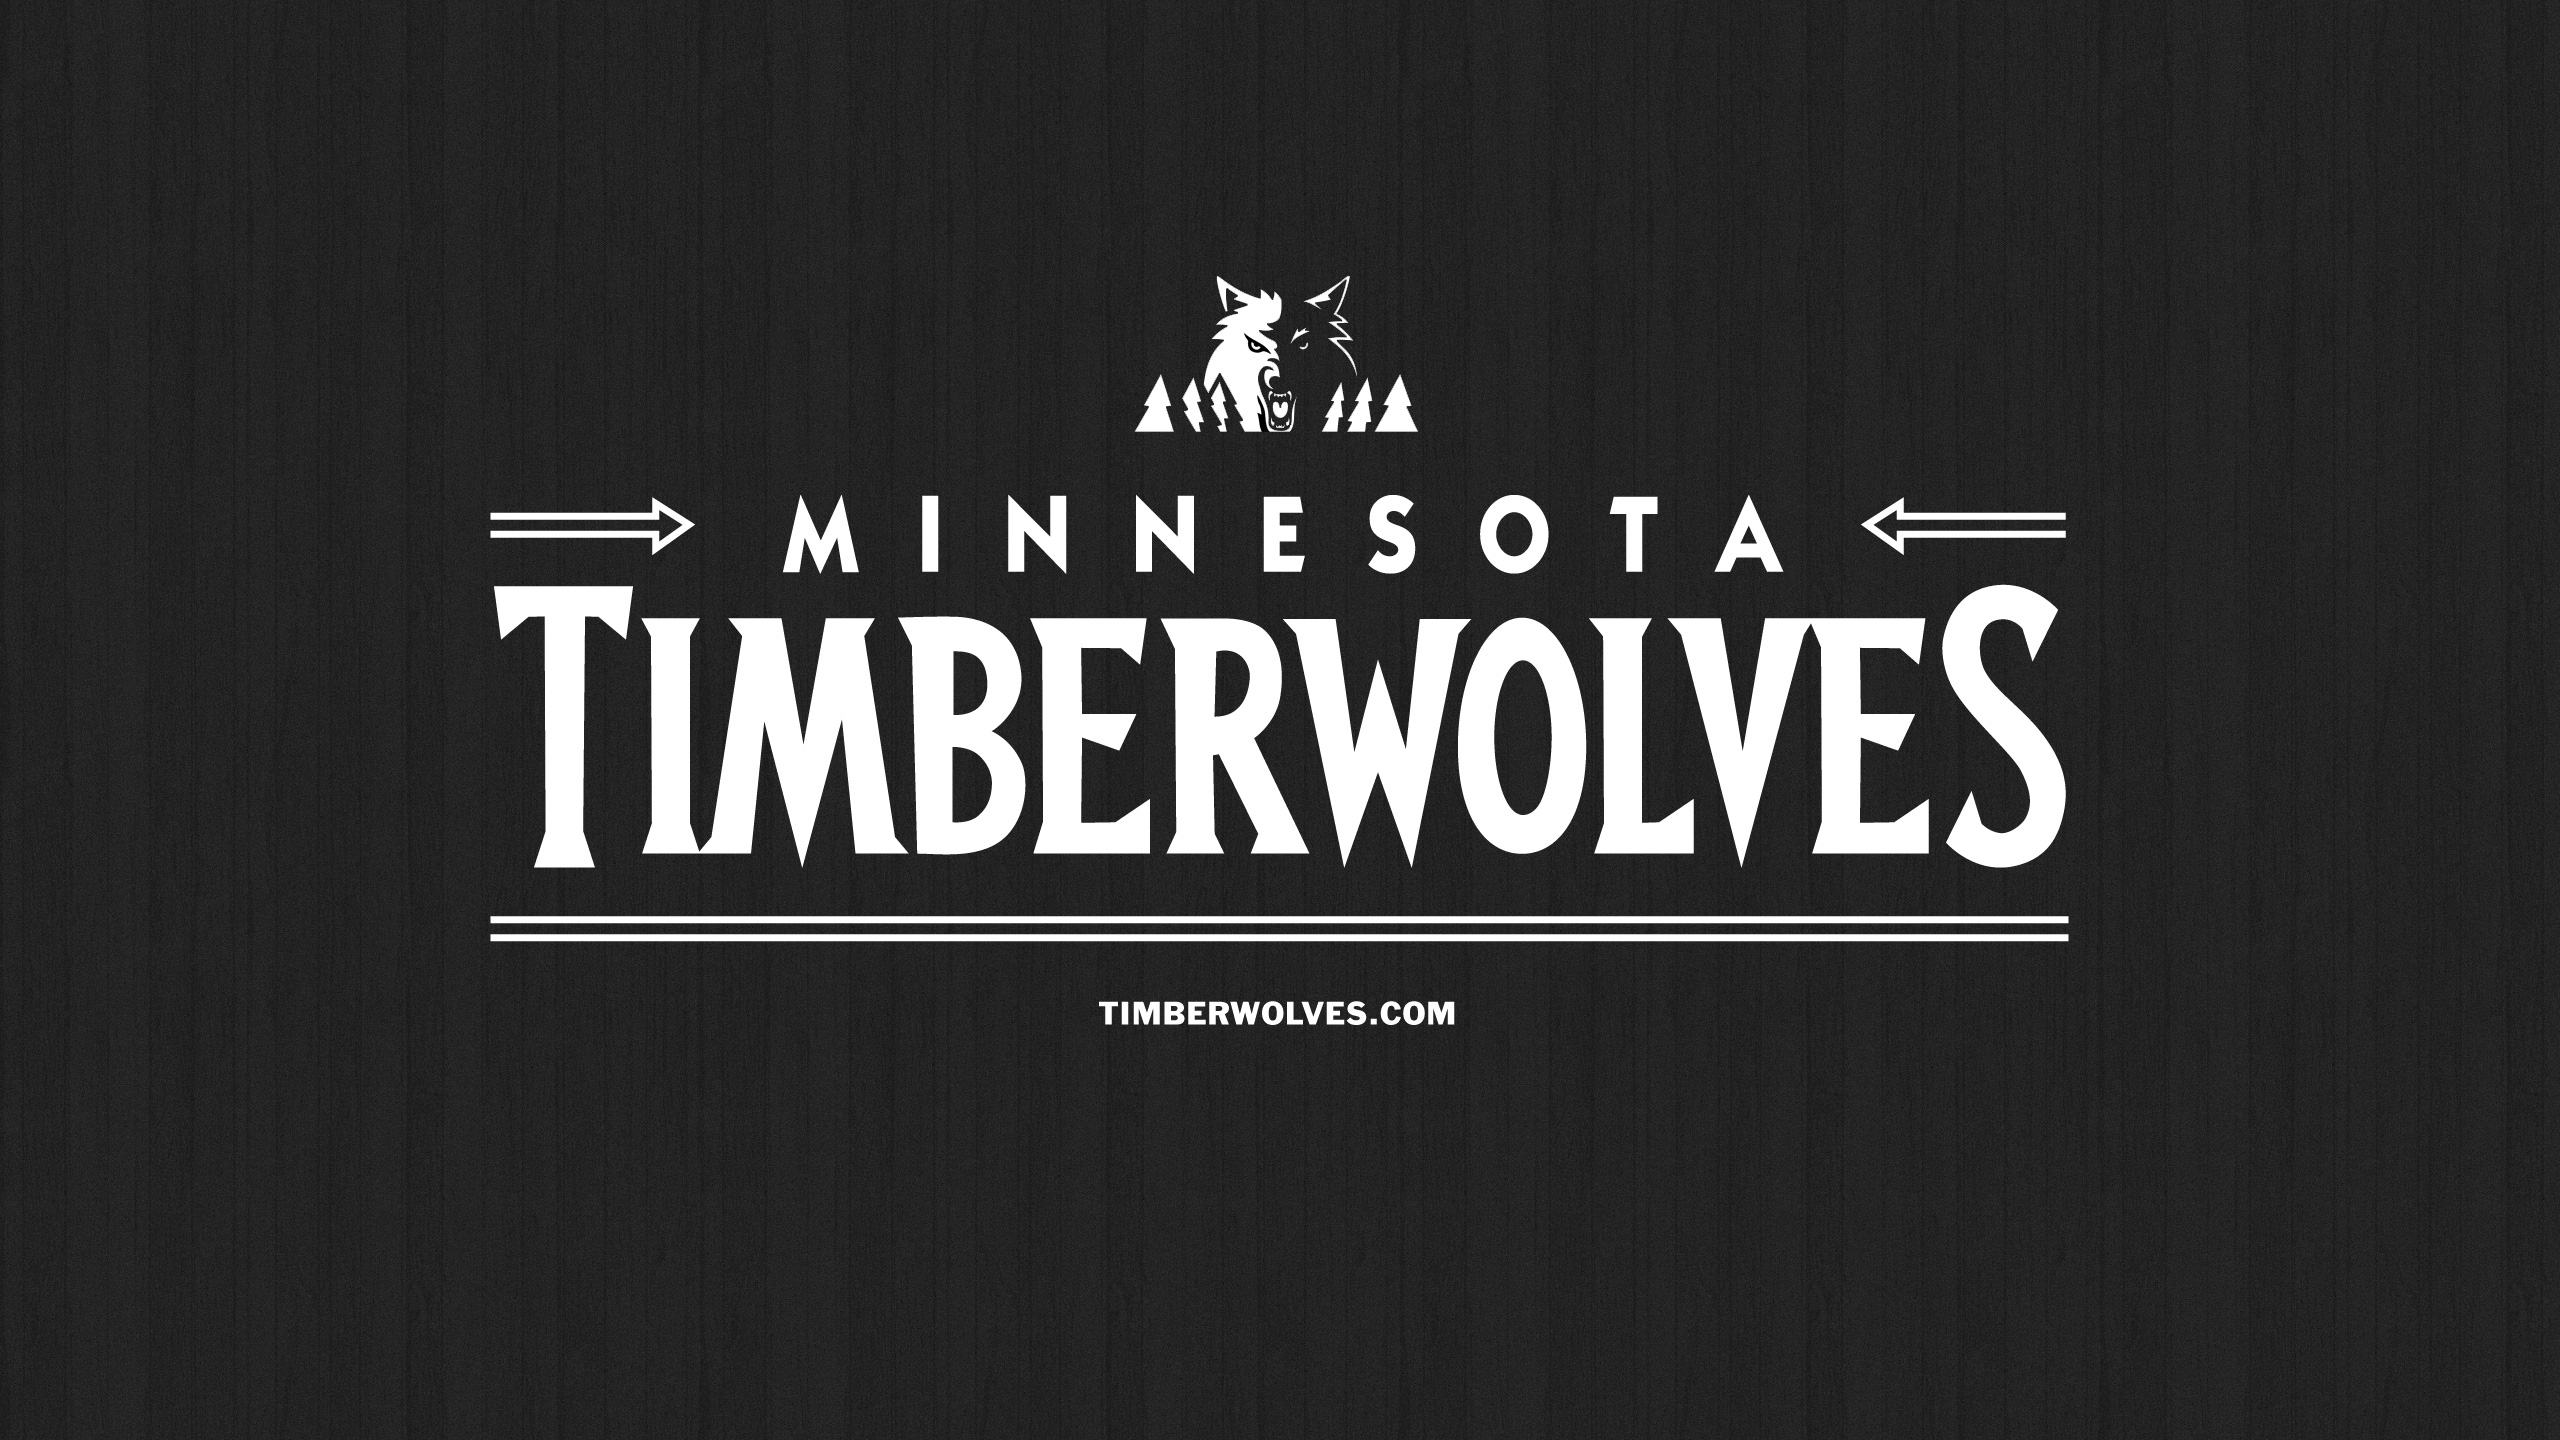 Wonderful Minnesota Timberwolves Wallpaper | Full HD Pictures